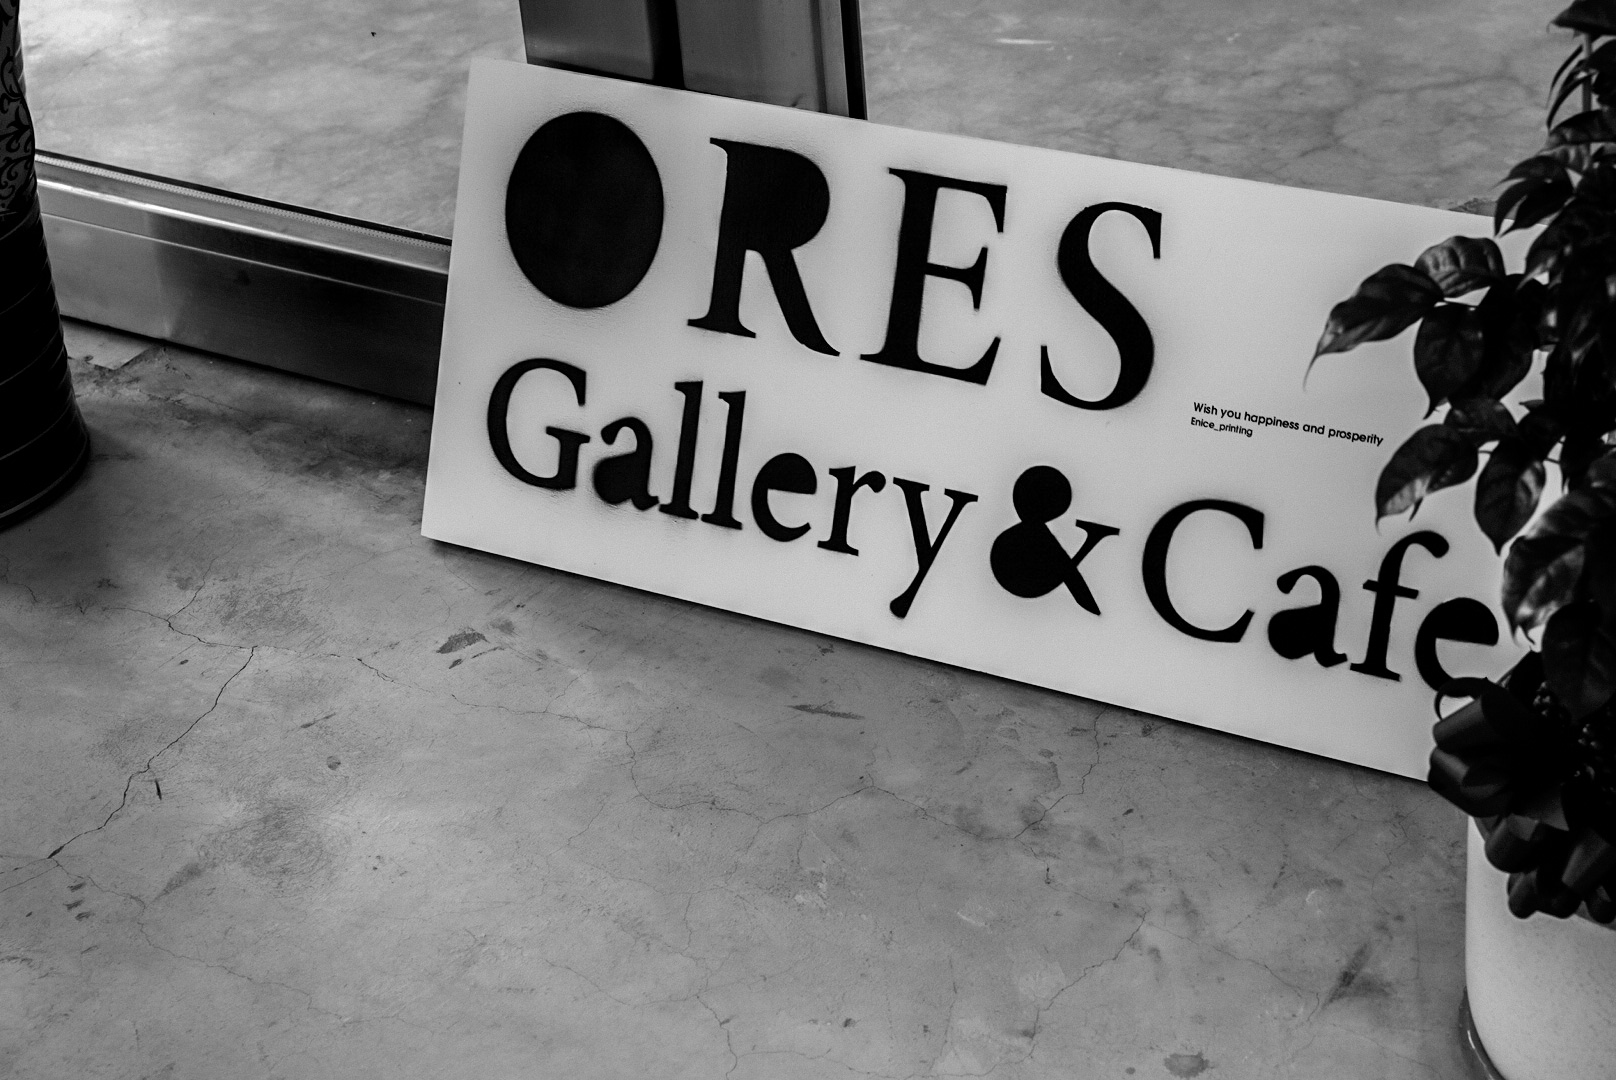 Ores Gallery & Cafe地址,Ores Gallery & Cafe營業時間,Ores Gallery & Cafe訂位,Ores Gallery & Cafe電話,Ores Gallery & Cafe菜單,Ores Gallery & Cafe fb,Ores Gallery & Cafe ig,Ores Cafe地址,Ores Cafe營業時間,Ores Cafe訂位,Ores Cafe fb,Ores Cafe ig,Ores Cafe菜單,台中咖啡廳,台中美食,台中西屯區下午茶,台中西屯區咖啡廳,台中中央公園,中央公園生活體驗區,台中市西屯區中科路2829號,台中特色咖啡廳,台中西區屯特色咖啡廳,台中藝術咖啡廳,大花說,如何前往 Ores Gallery & Cafe